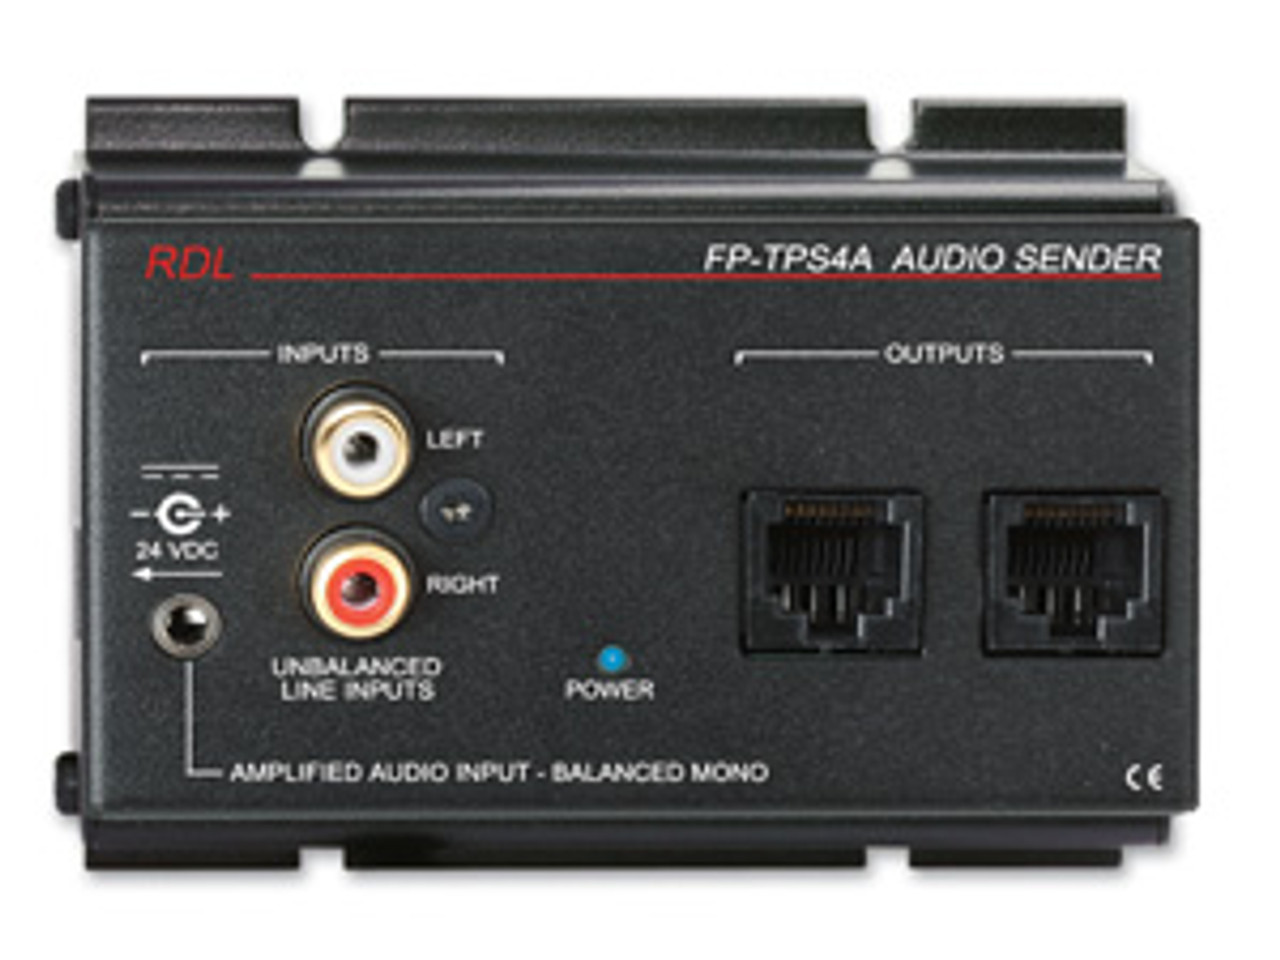  RDL FP-TPS4A Format-A Two-Pair Audio Sender (FP-TPS4A)